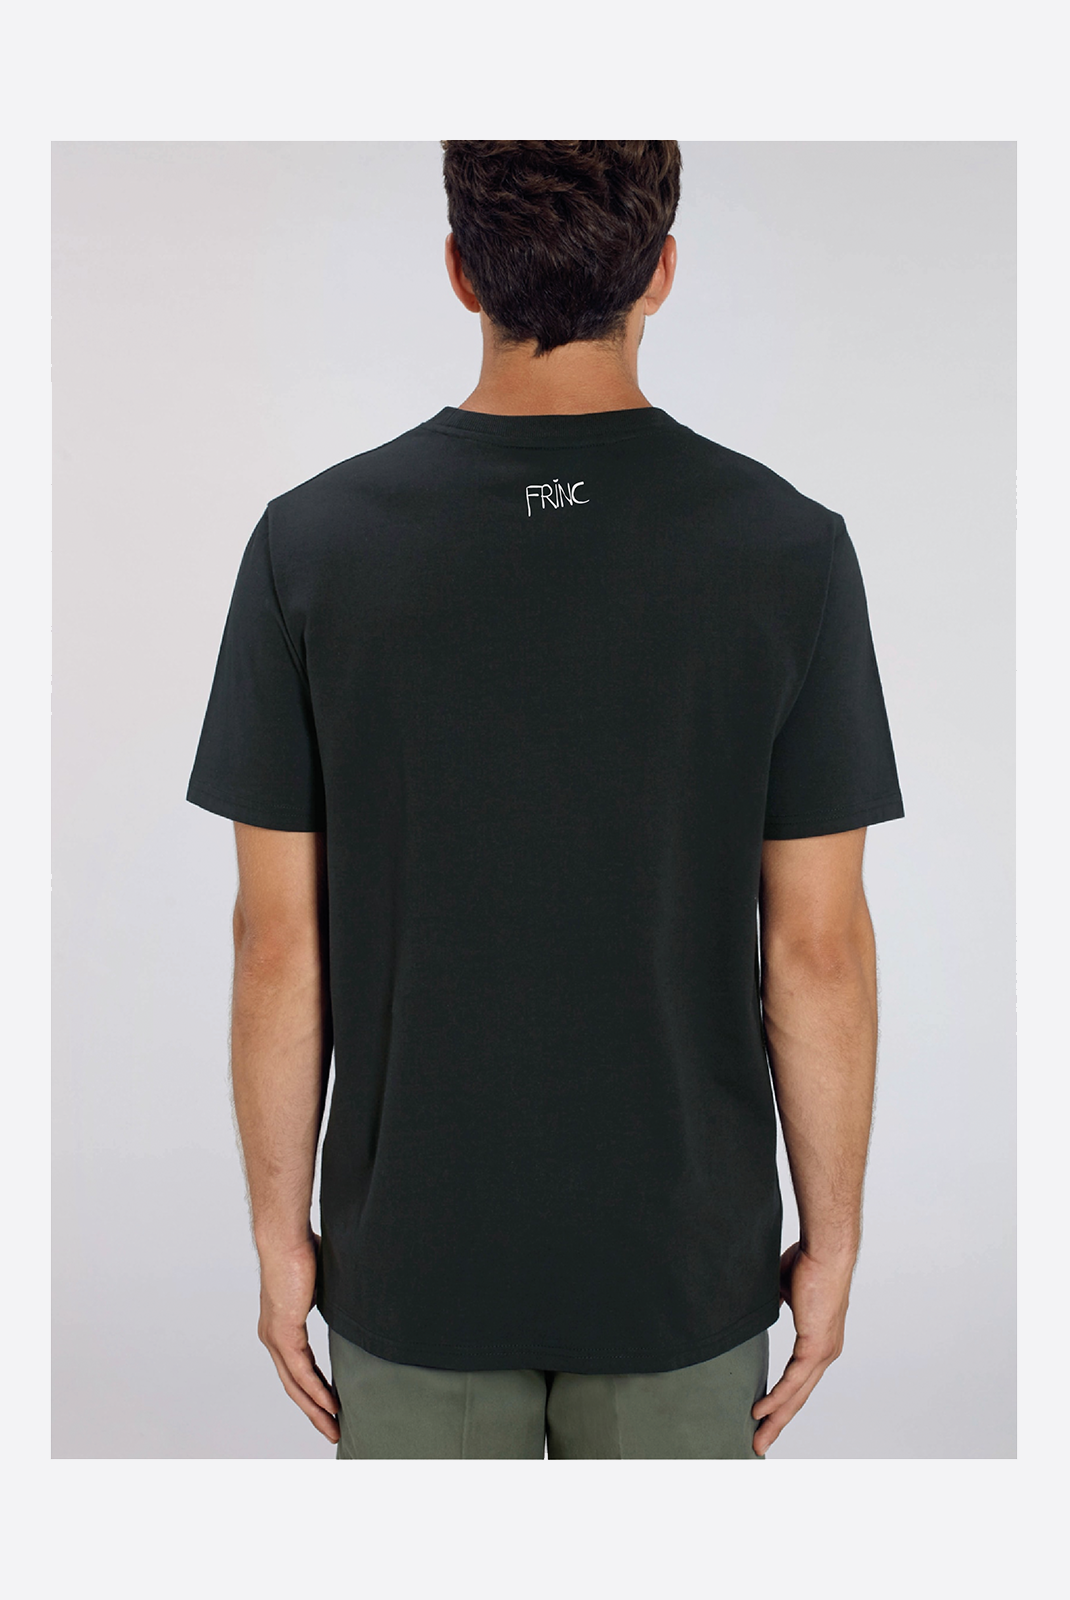 FRINC schwarz, Shirt